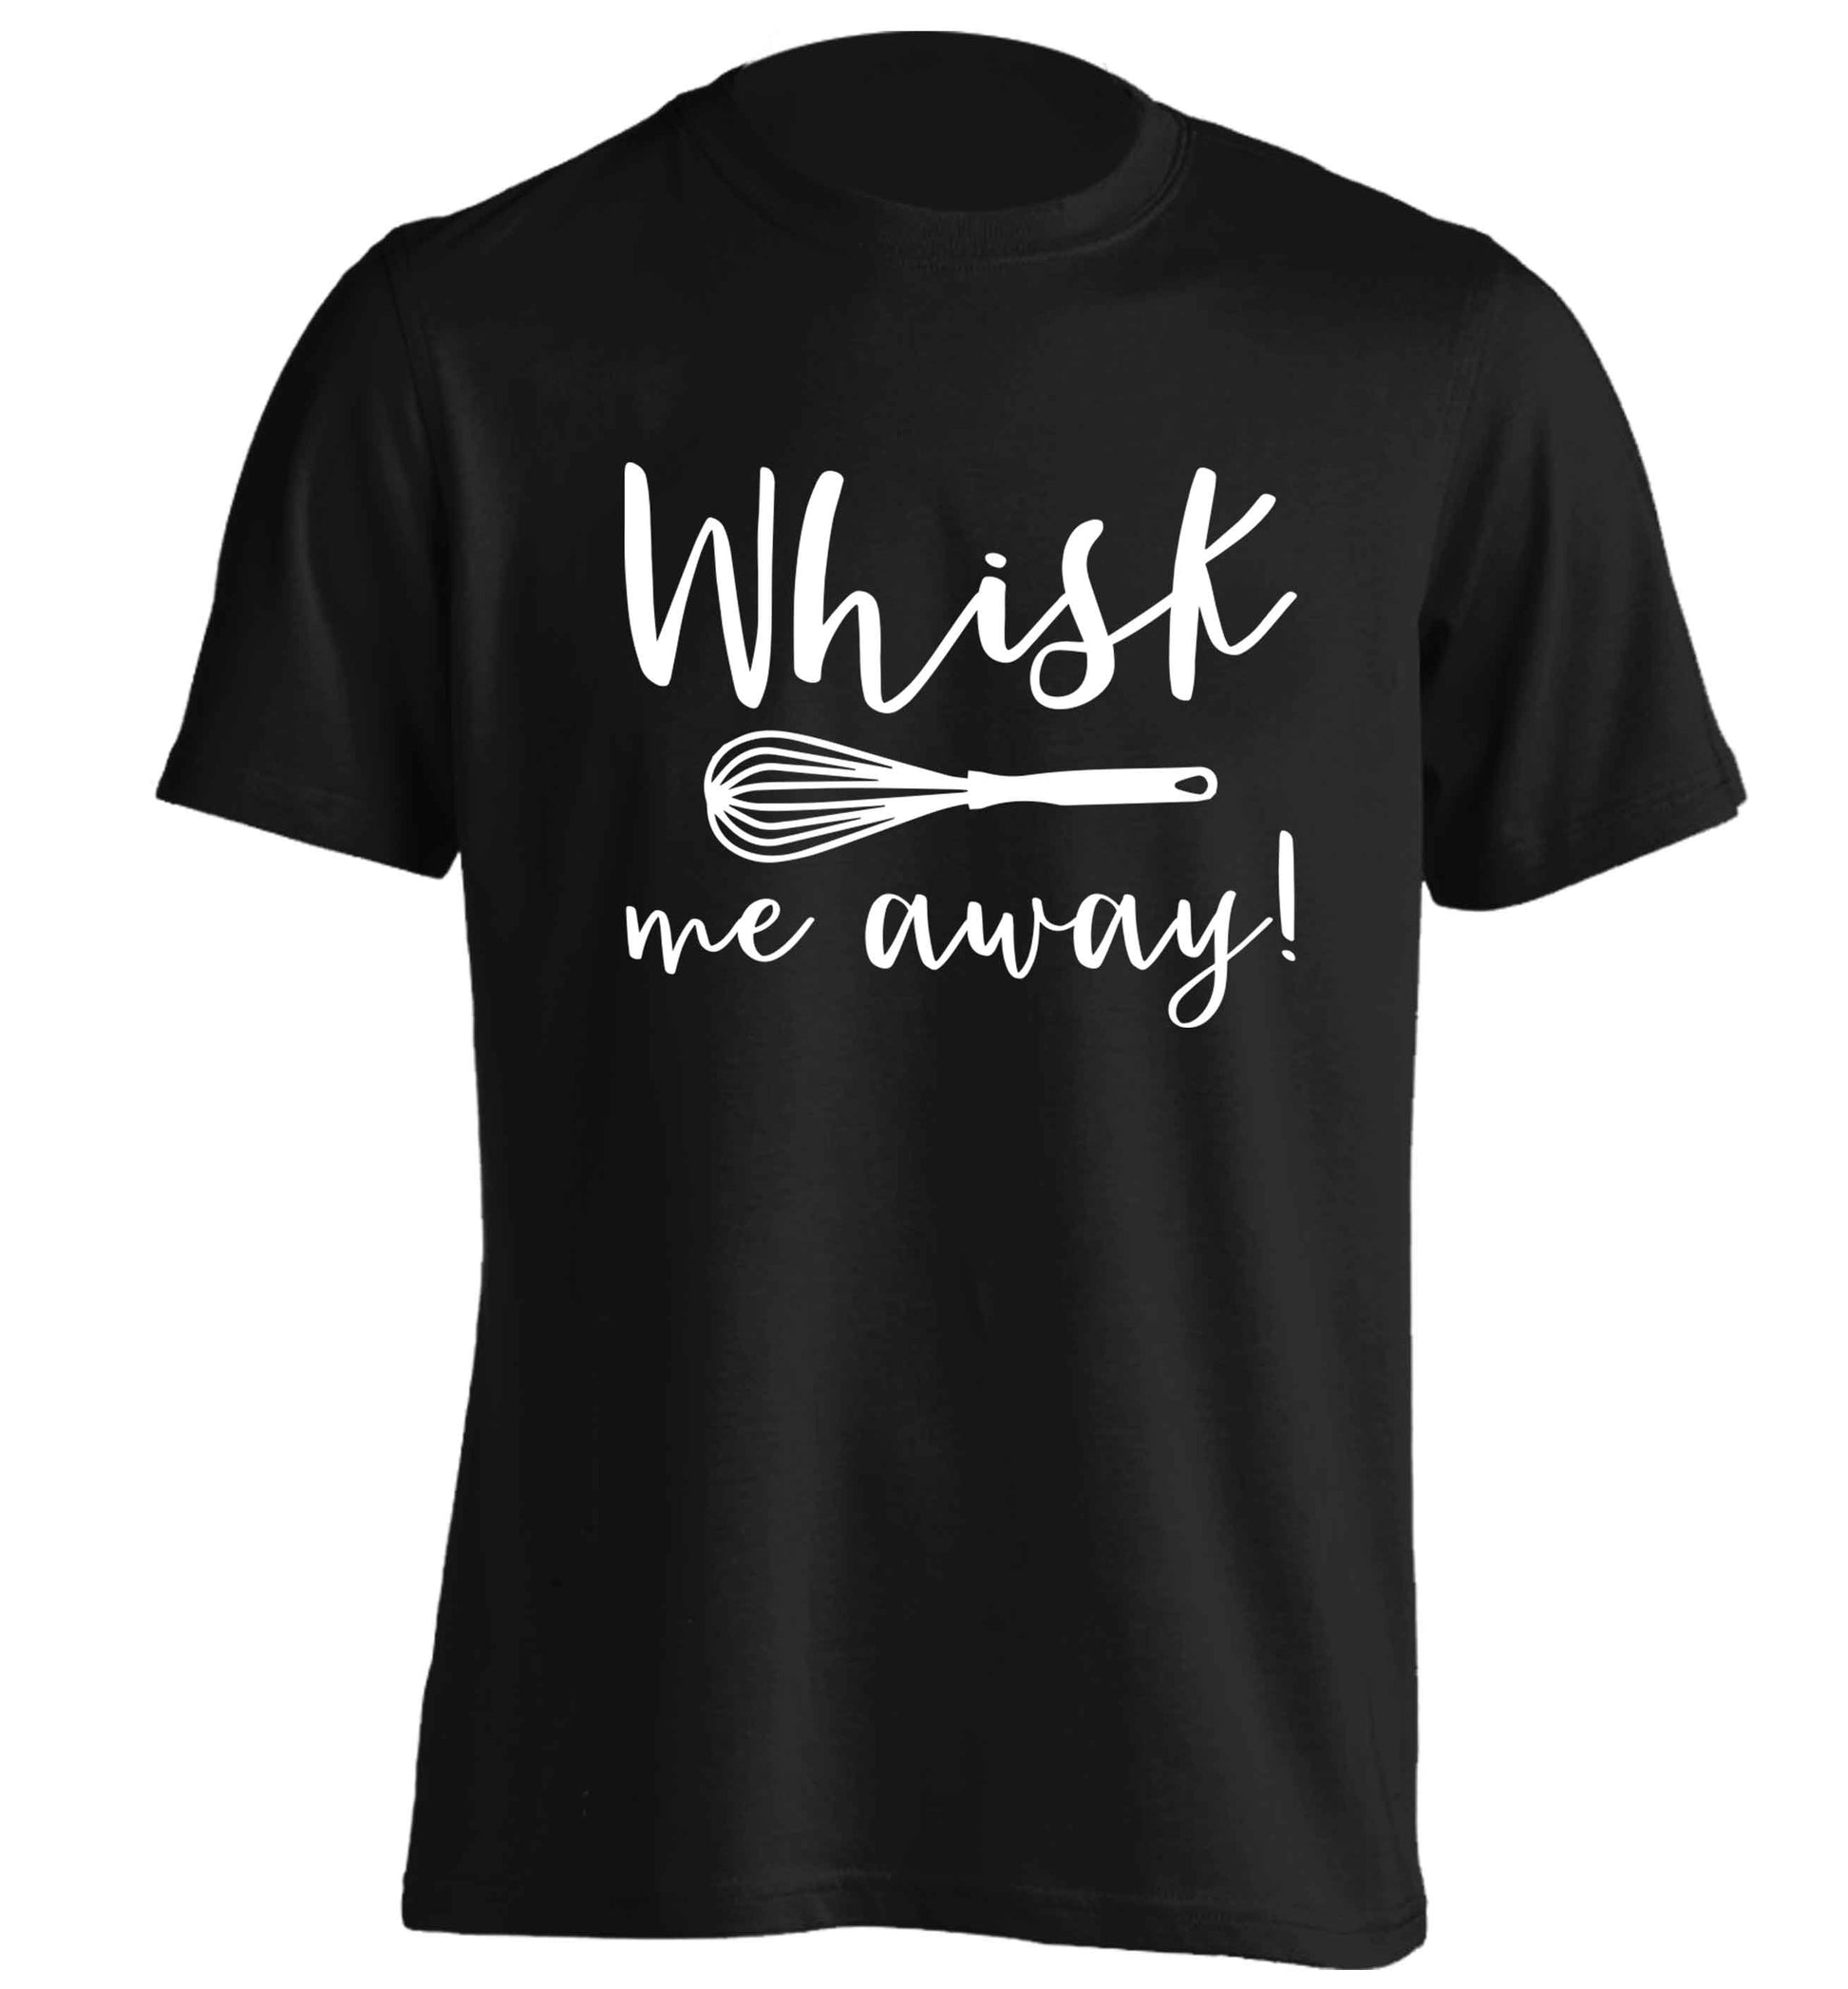 Whisk me away adults unisex black Tshirt 2XL